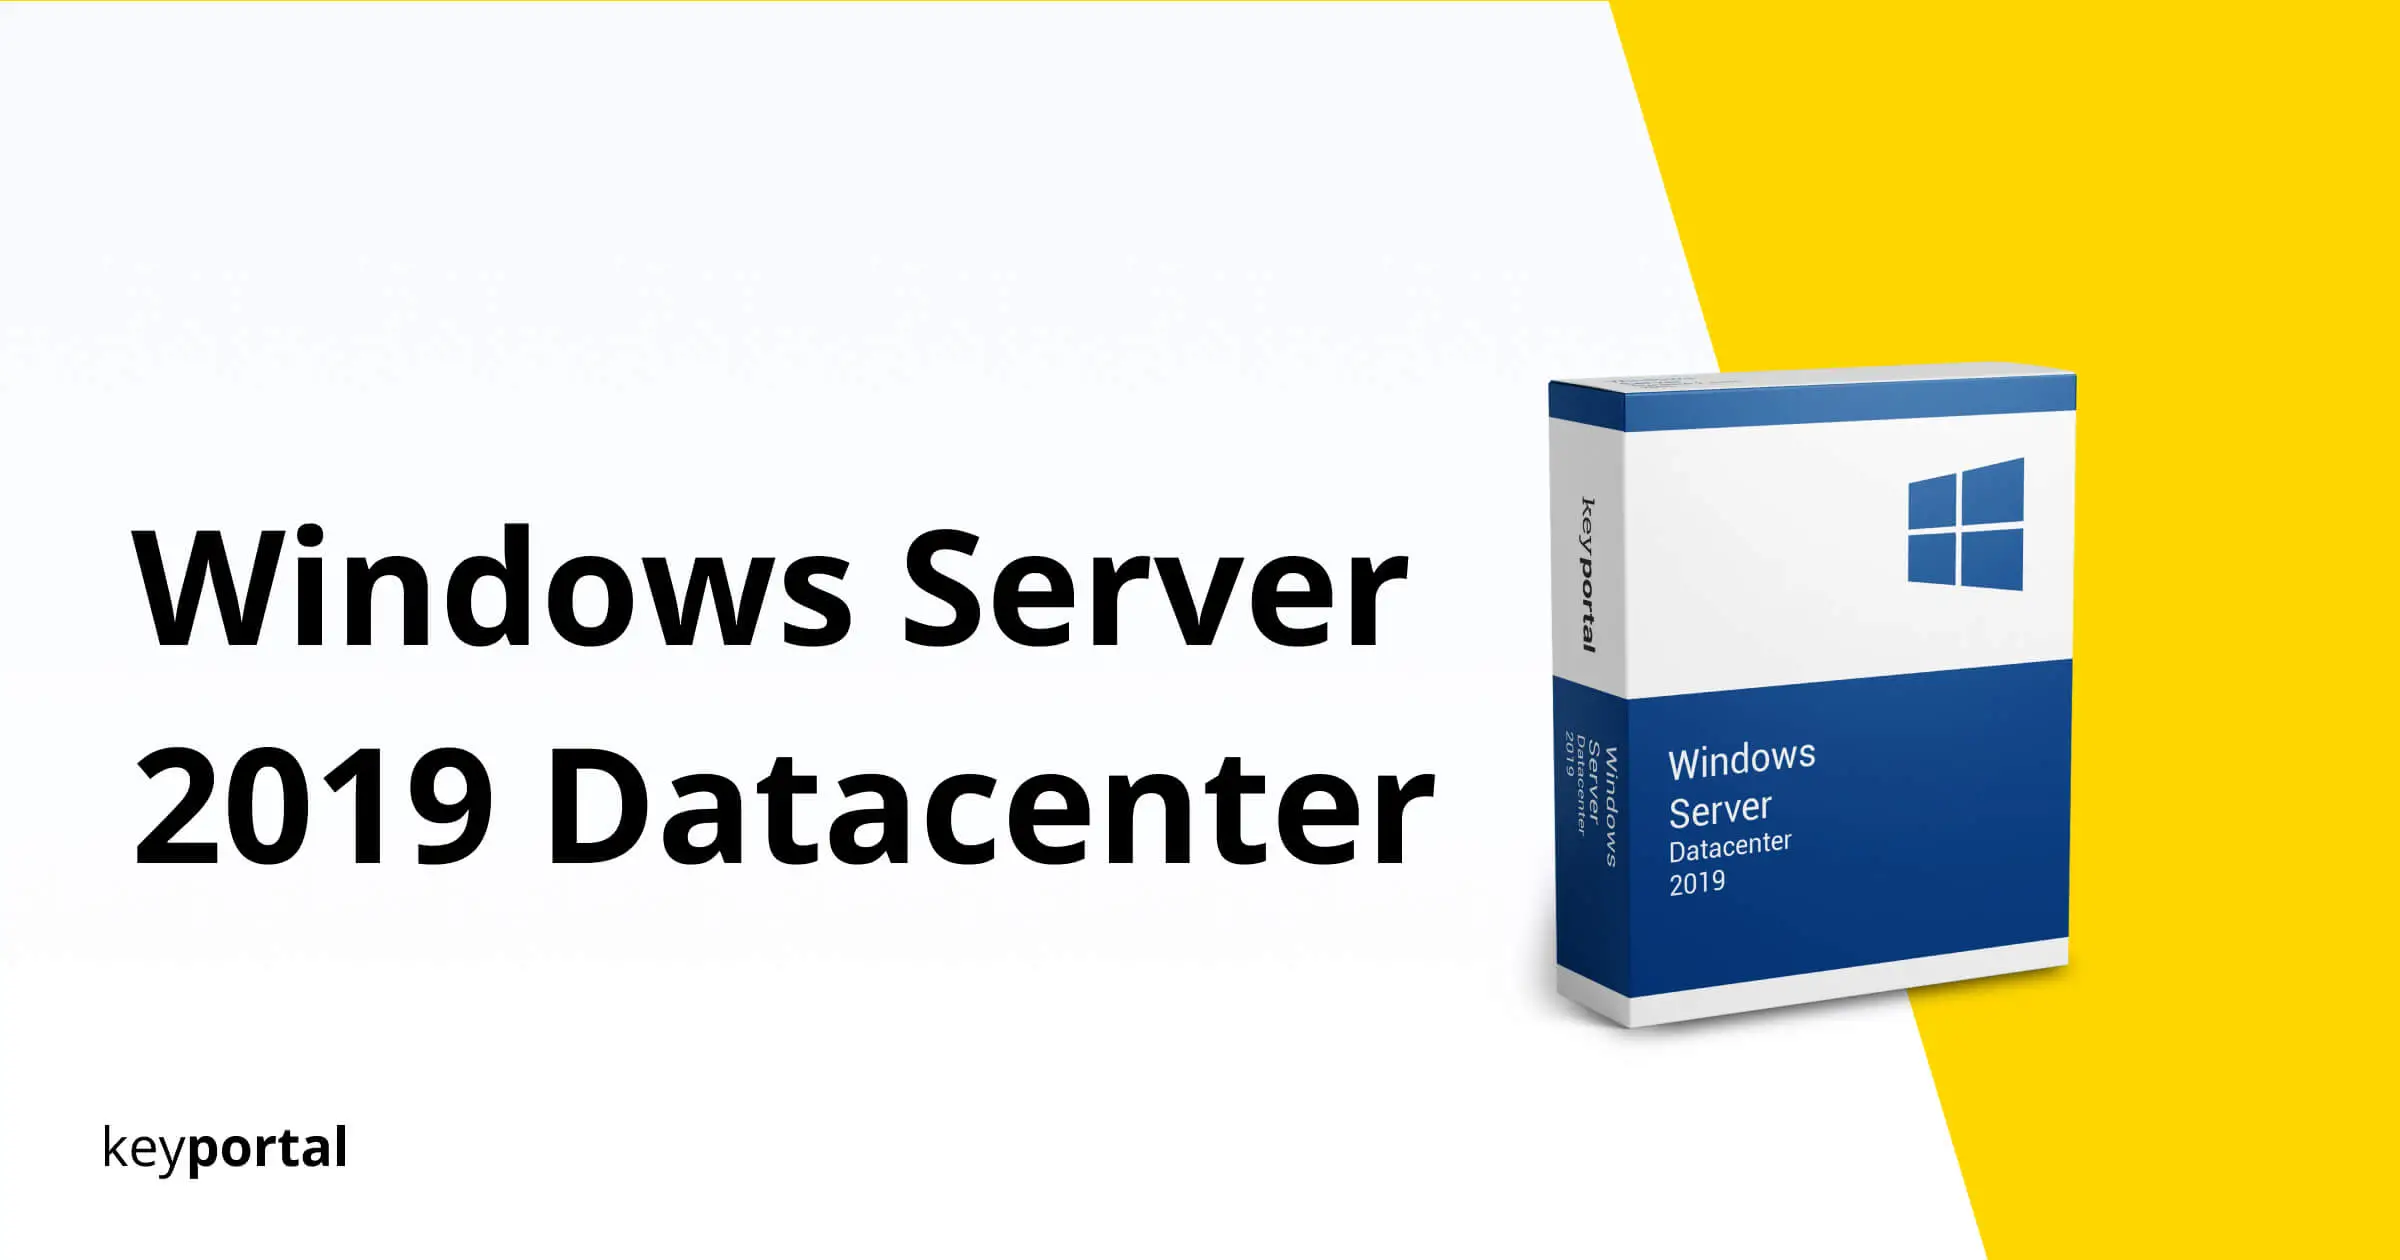 windows server 2019 datacenter kms key